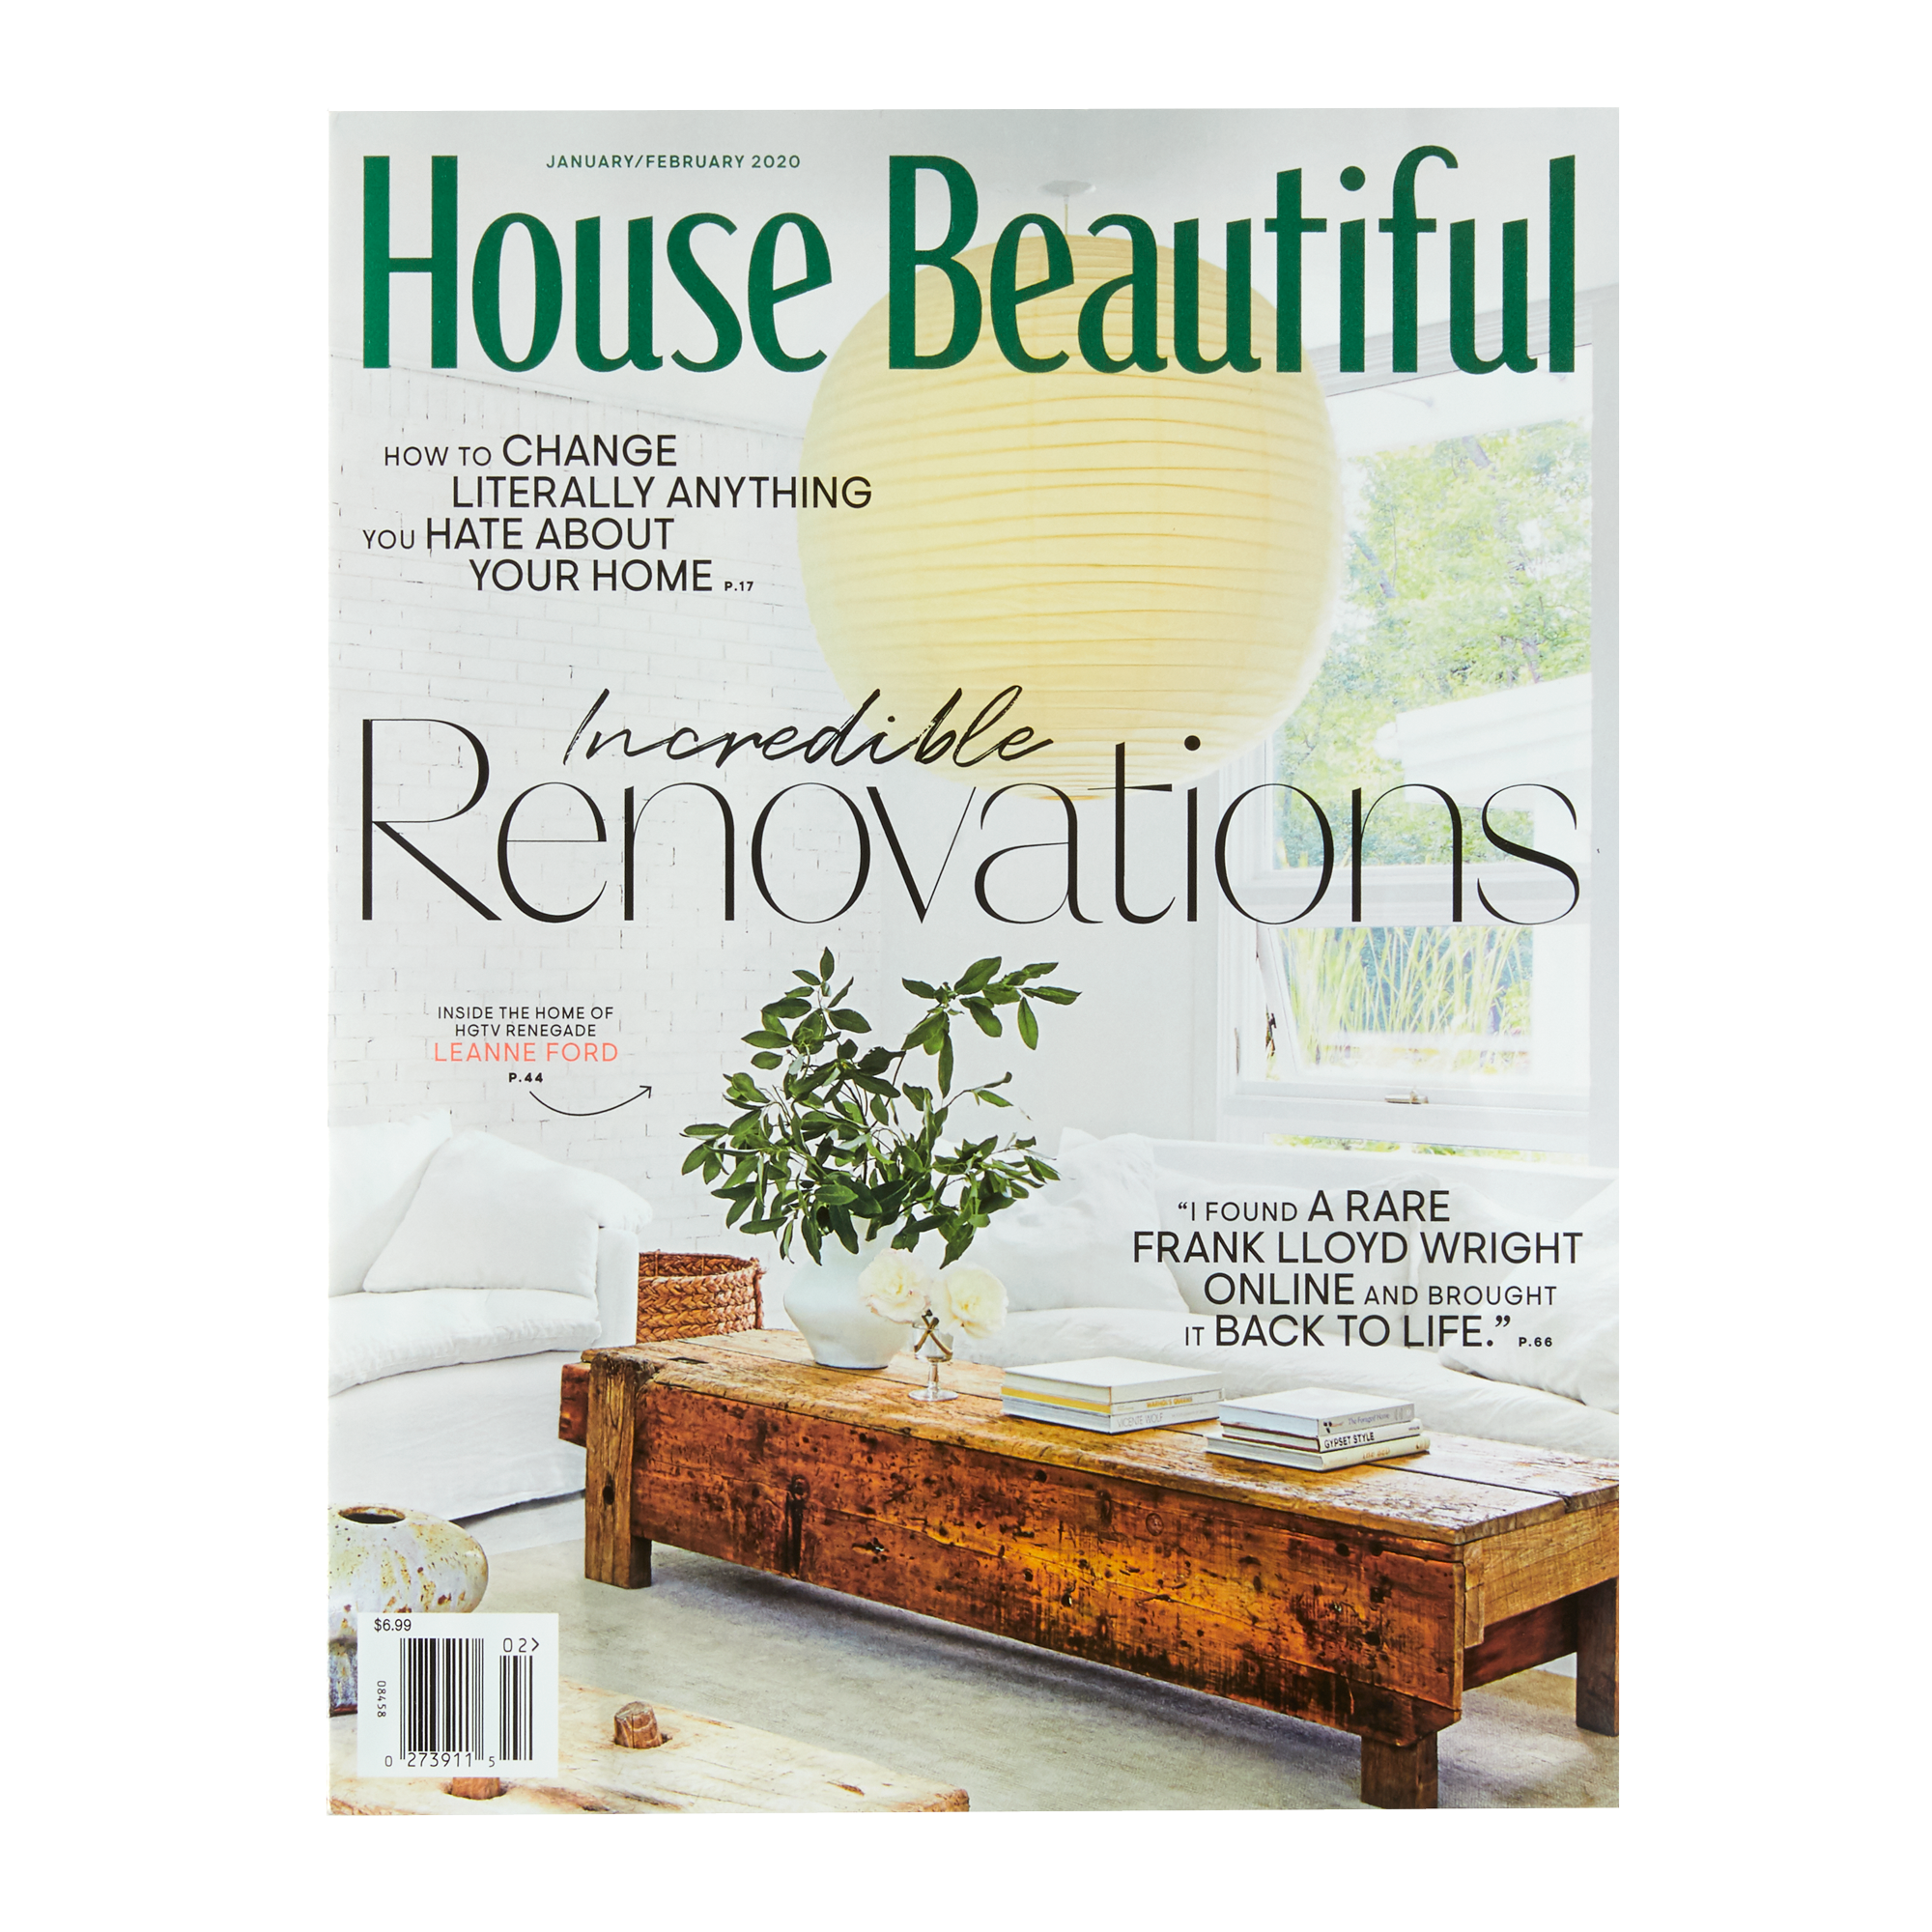 image of house beautiful magazine cover